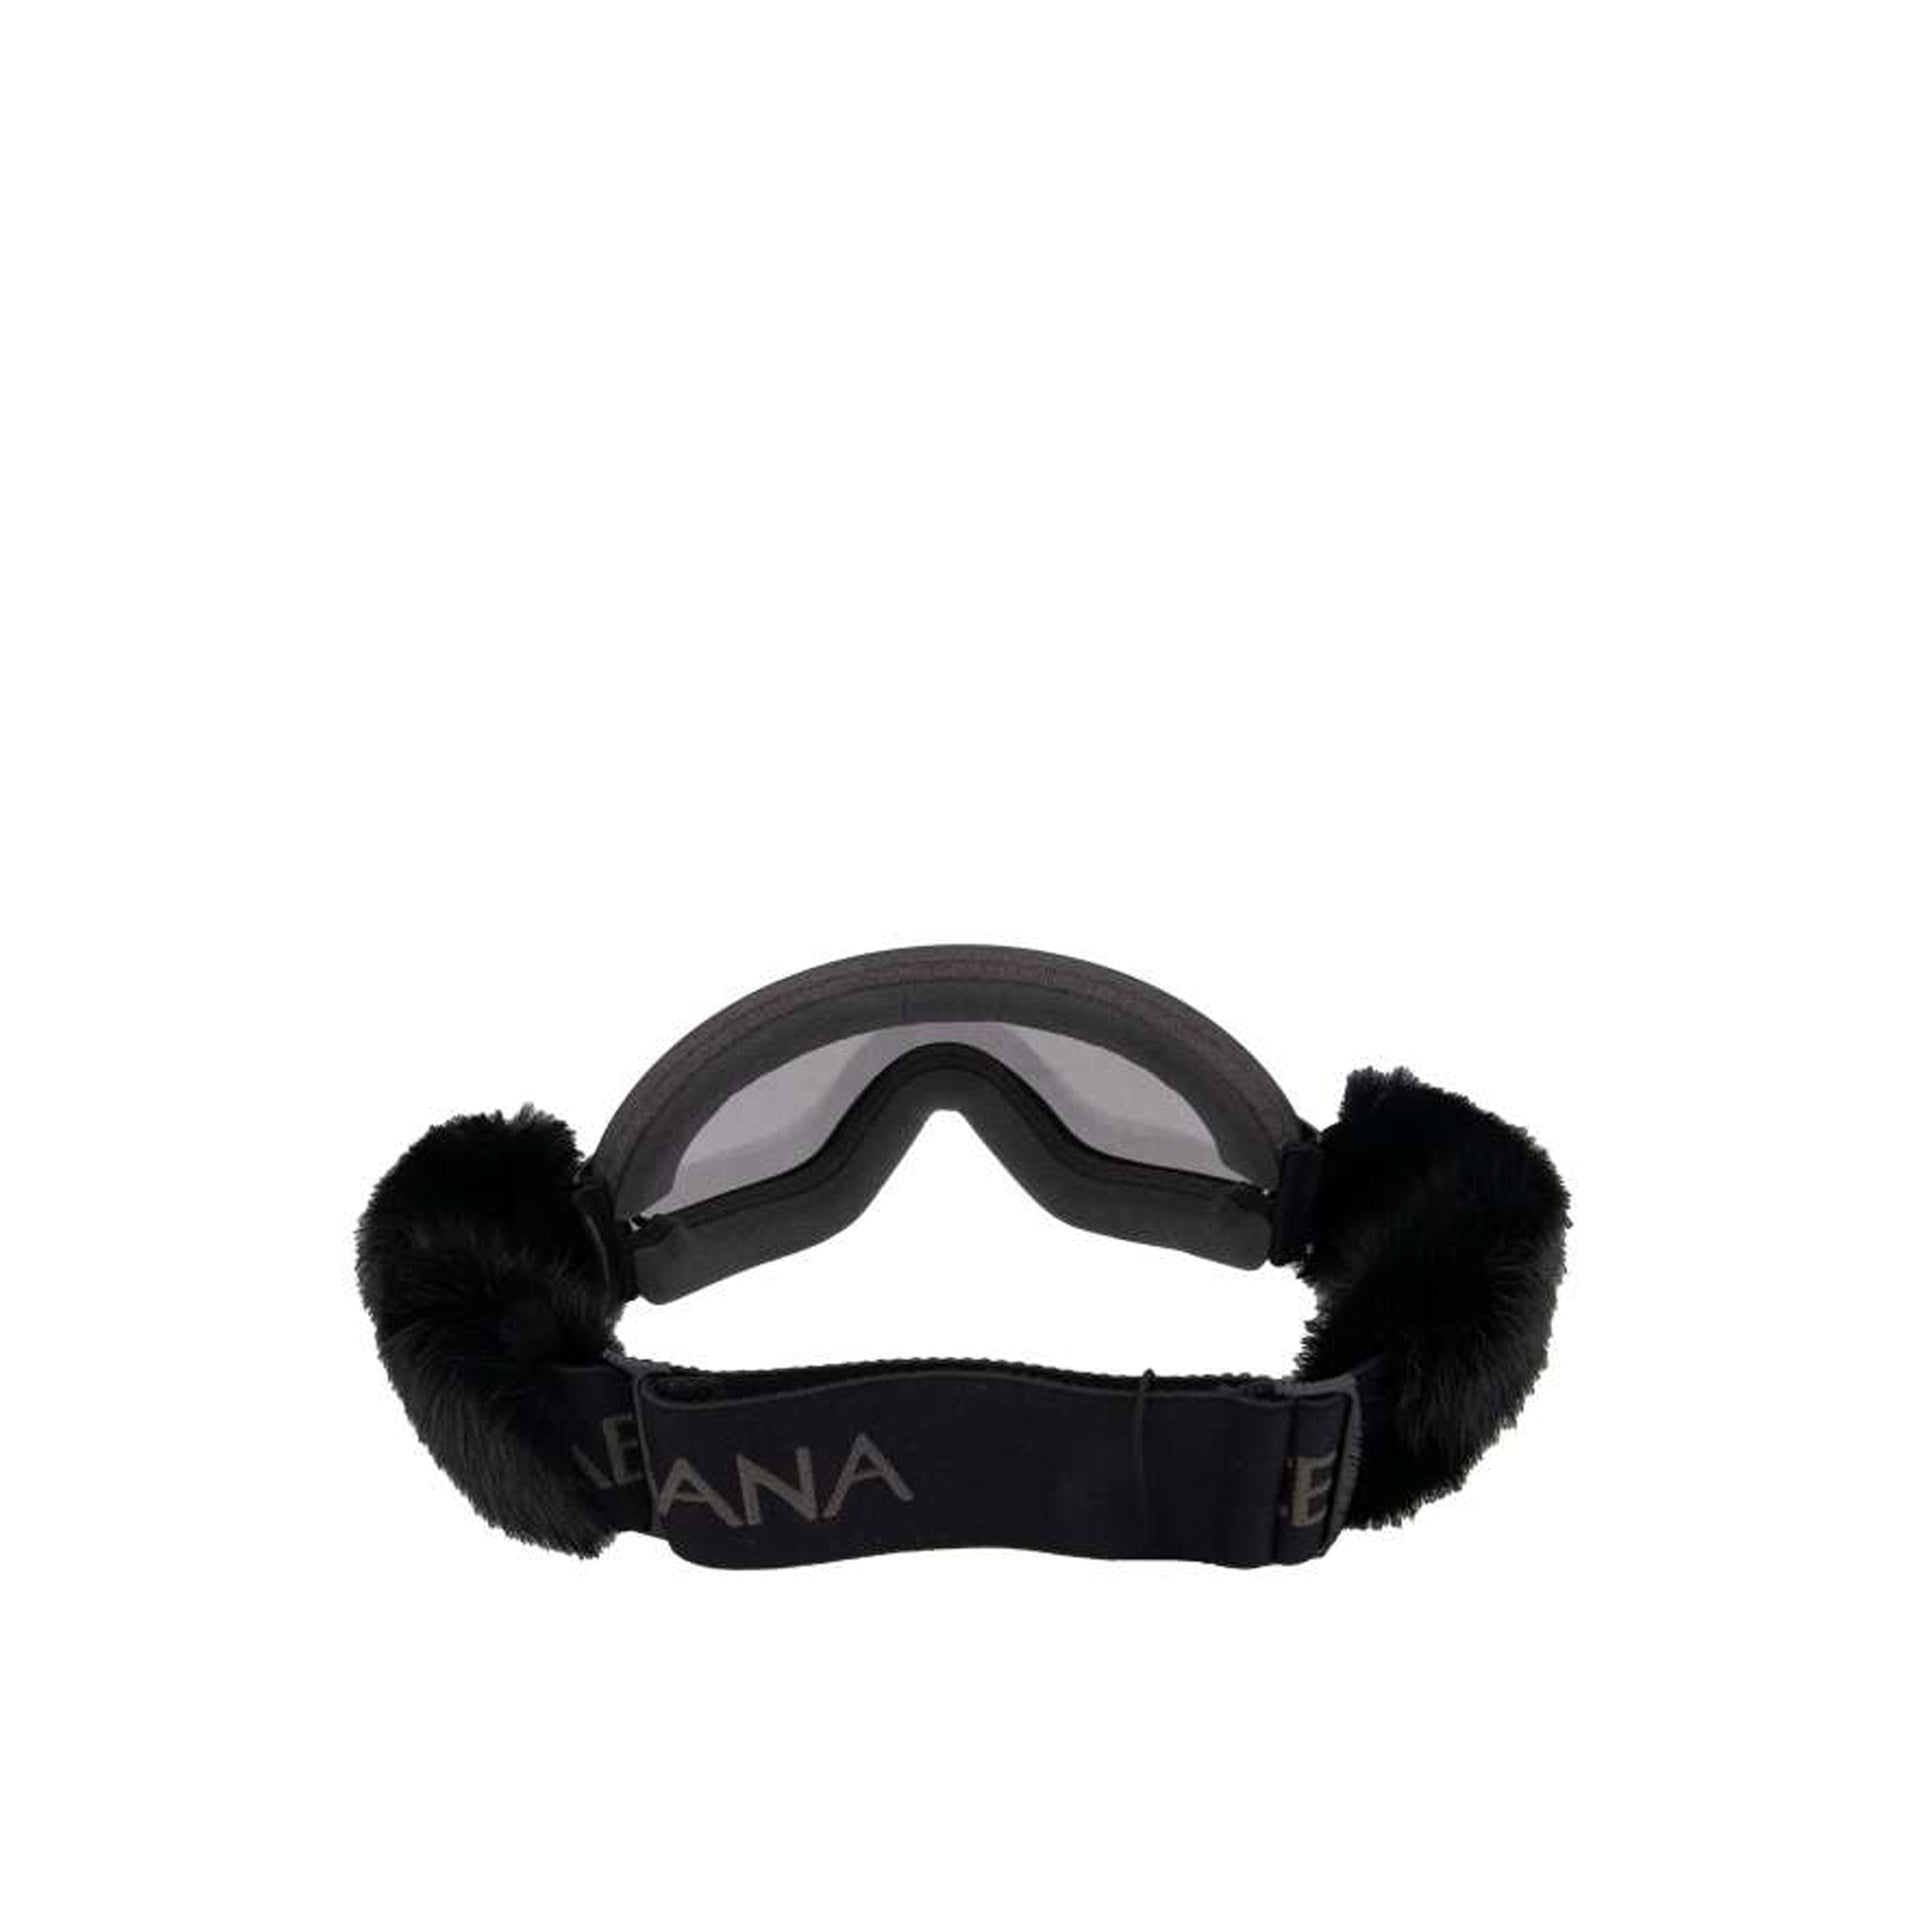 DOLCE-GABBANA-OUTLET-SALE-Dolce-Gabbana-Mirror-Ski-Mask-Sunglasses-Sonnenbrille-BLACK-UNI-ARCHIVE-COLLECTION-3.jpg